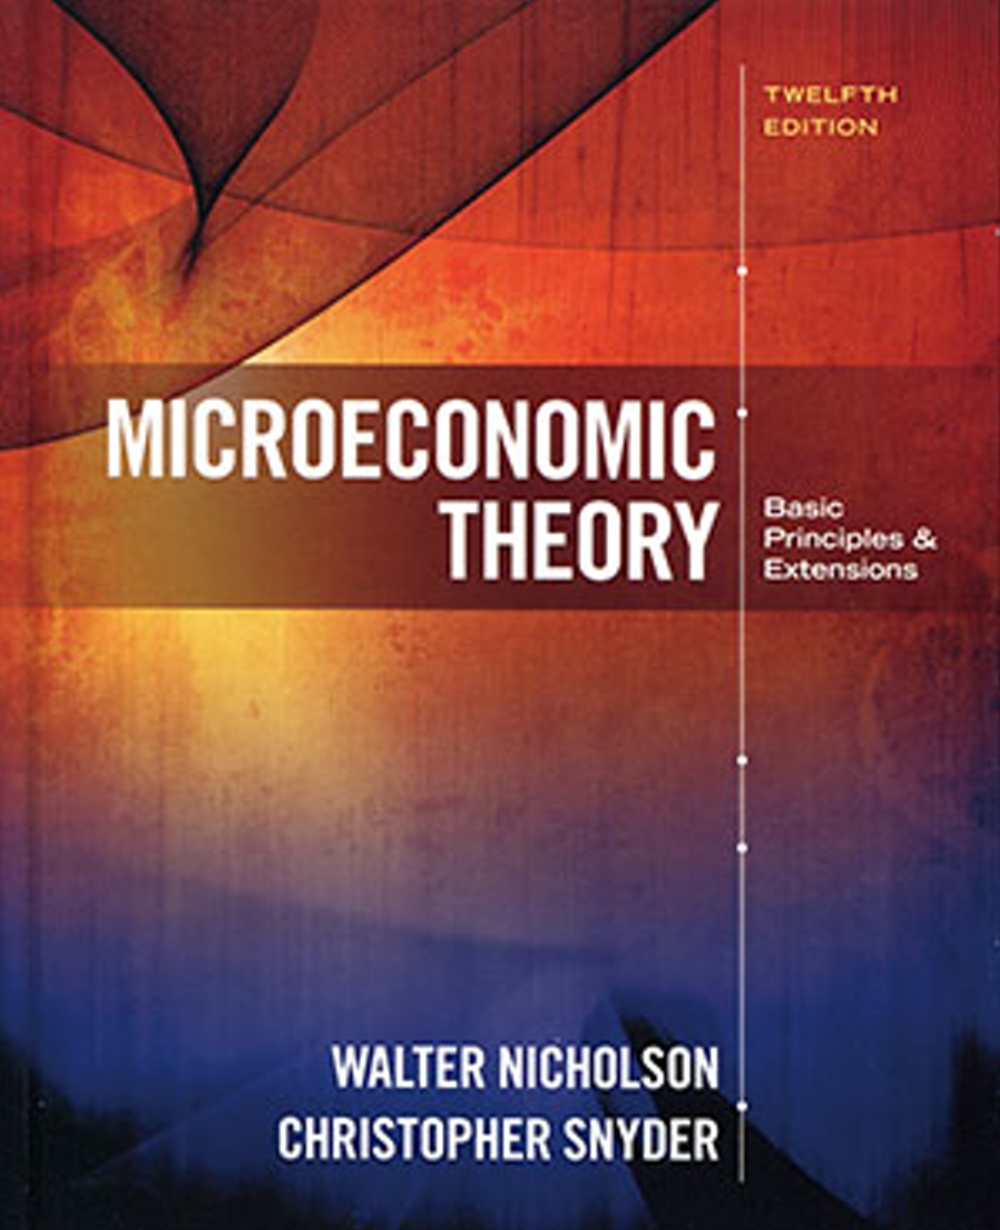 Microeconomic Theory: Basic Pr...